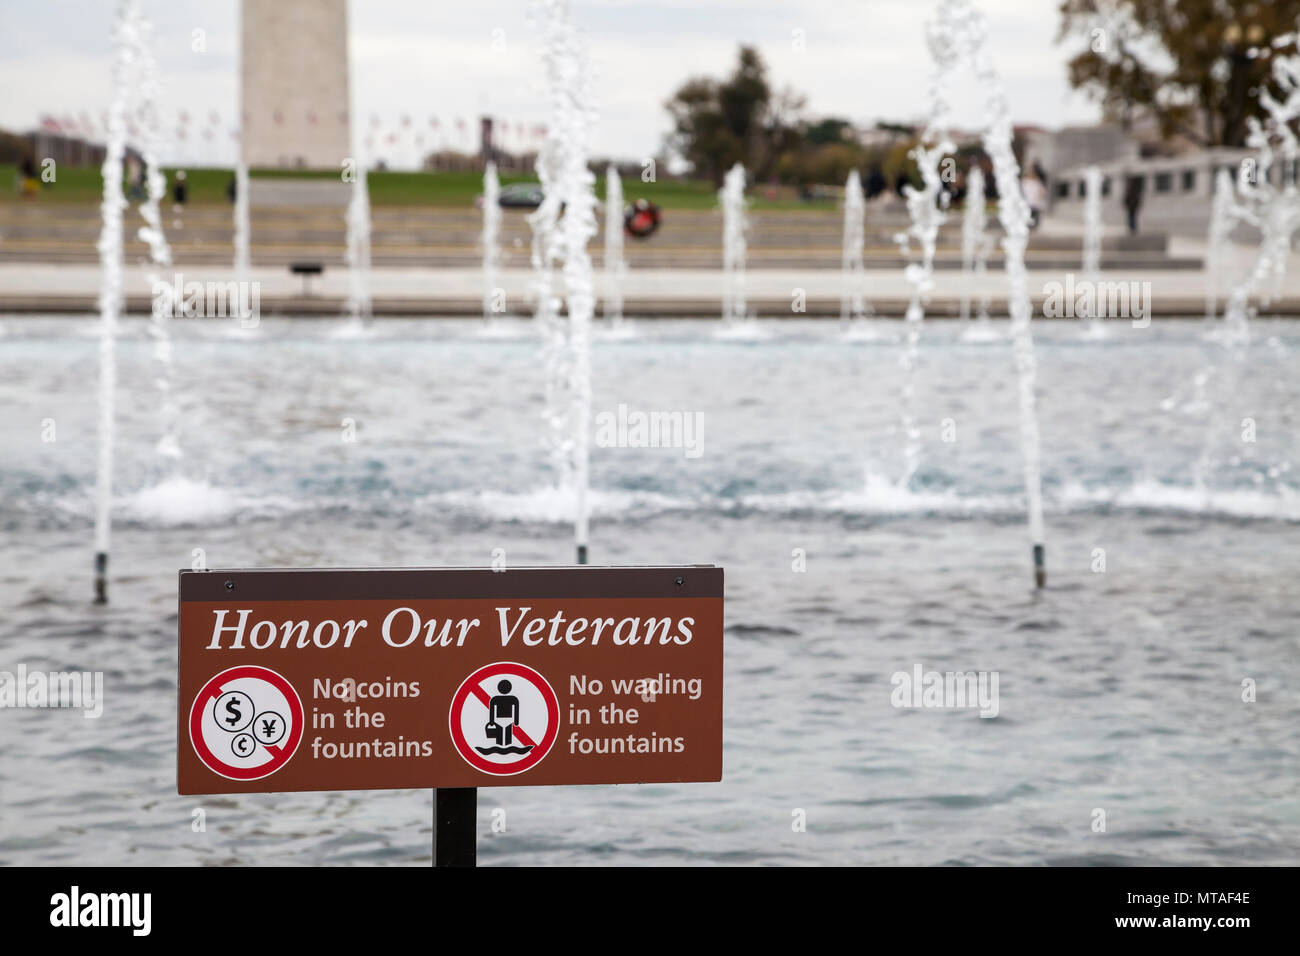 Honor our veteran sign at the Washington Monument fountain, Washington DC, USA Stock Photo